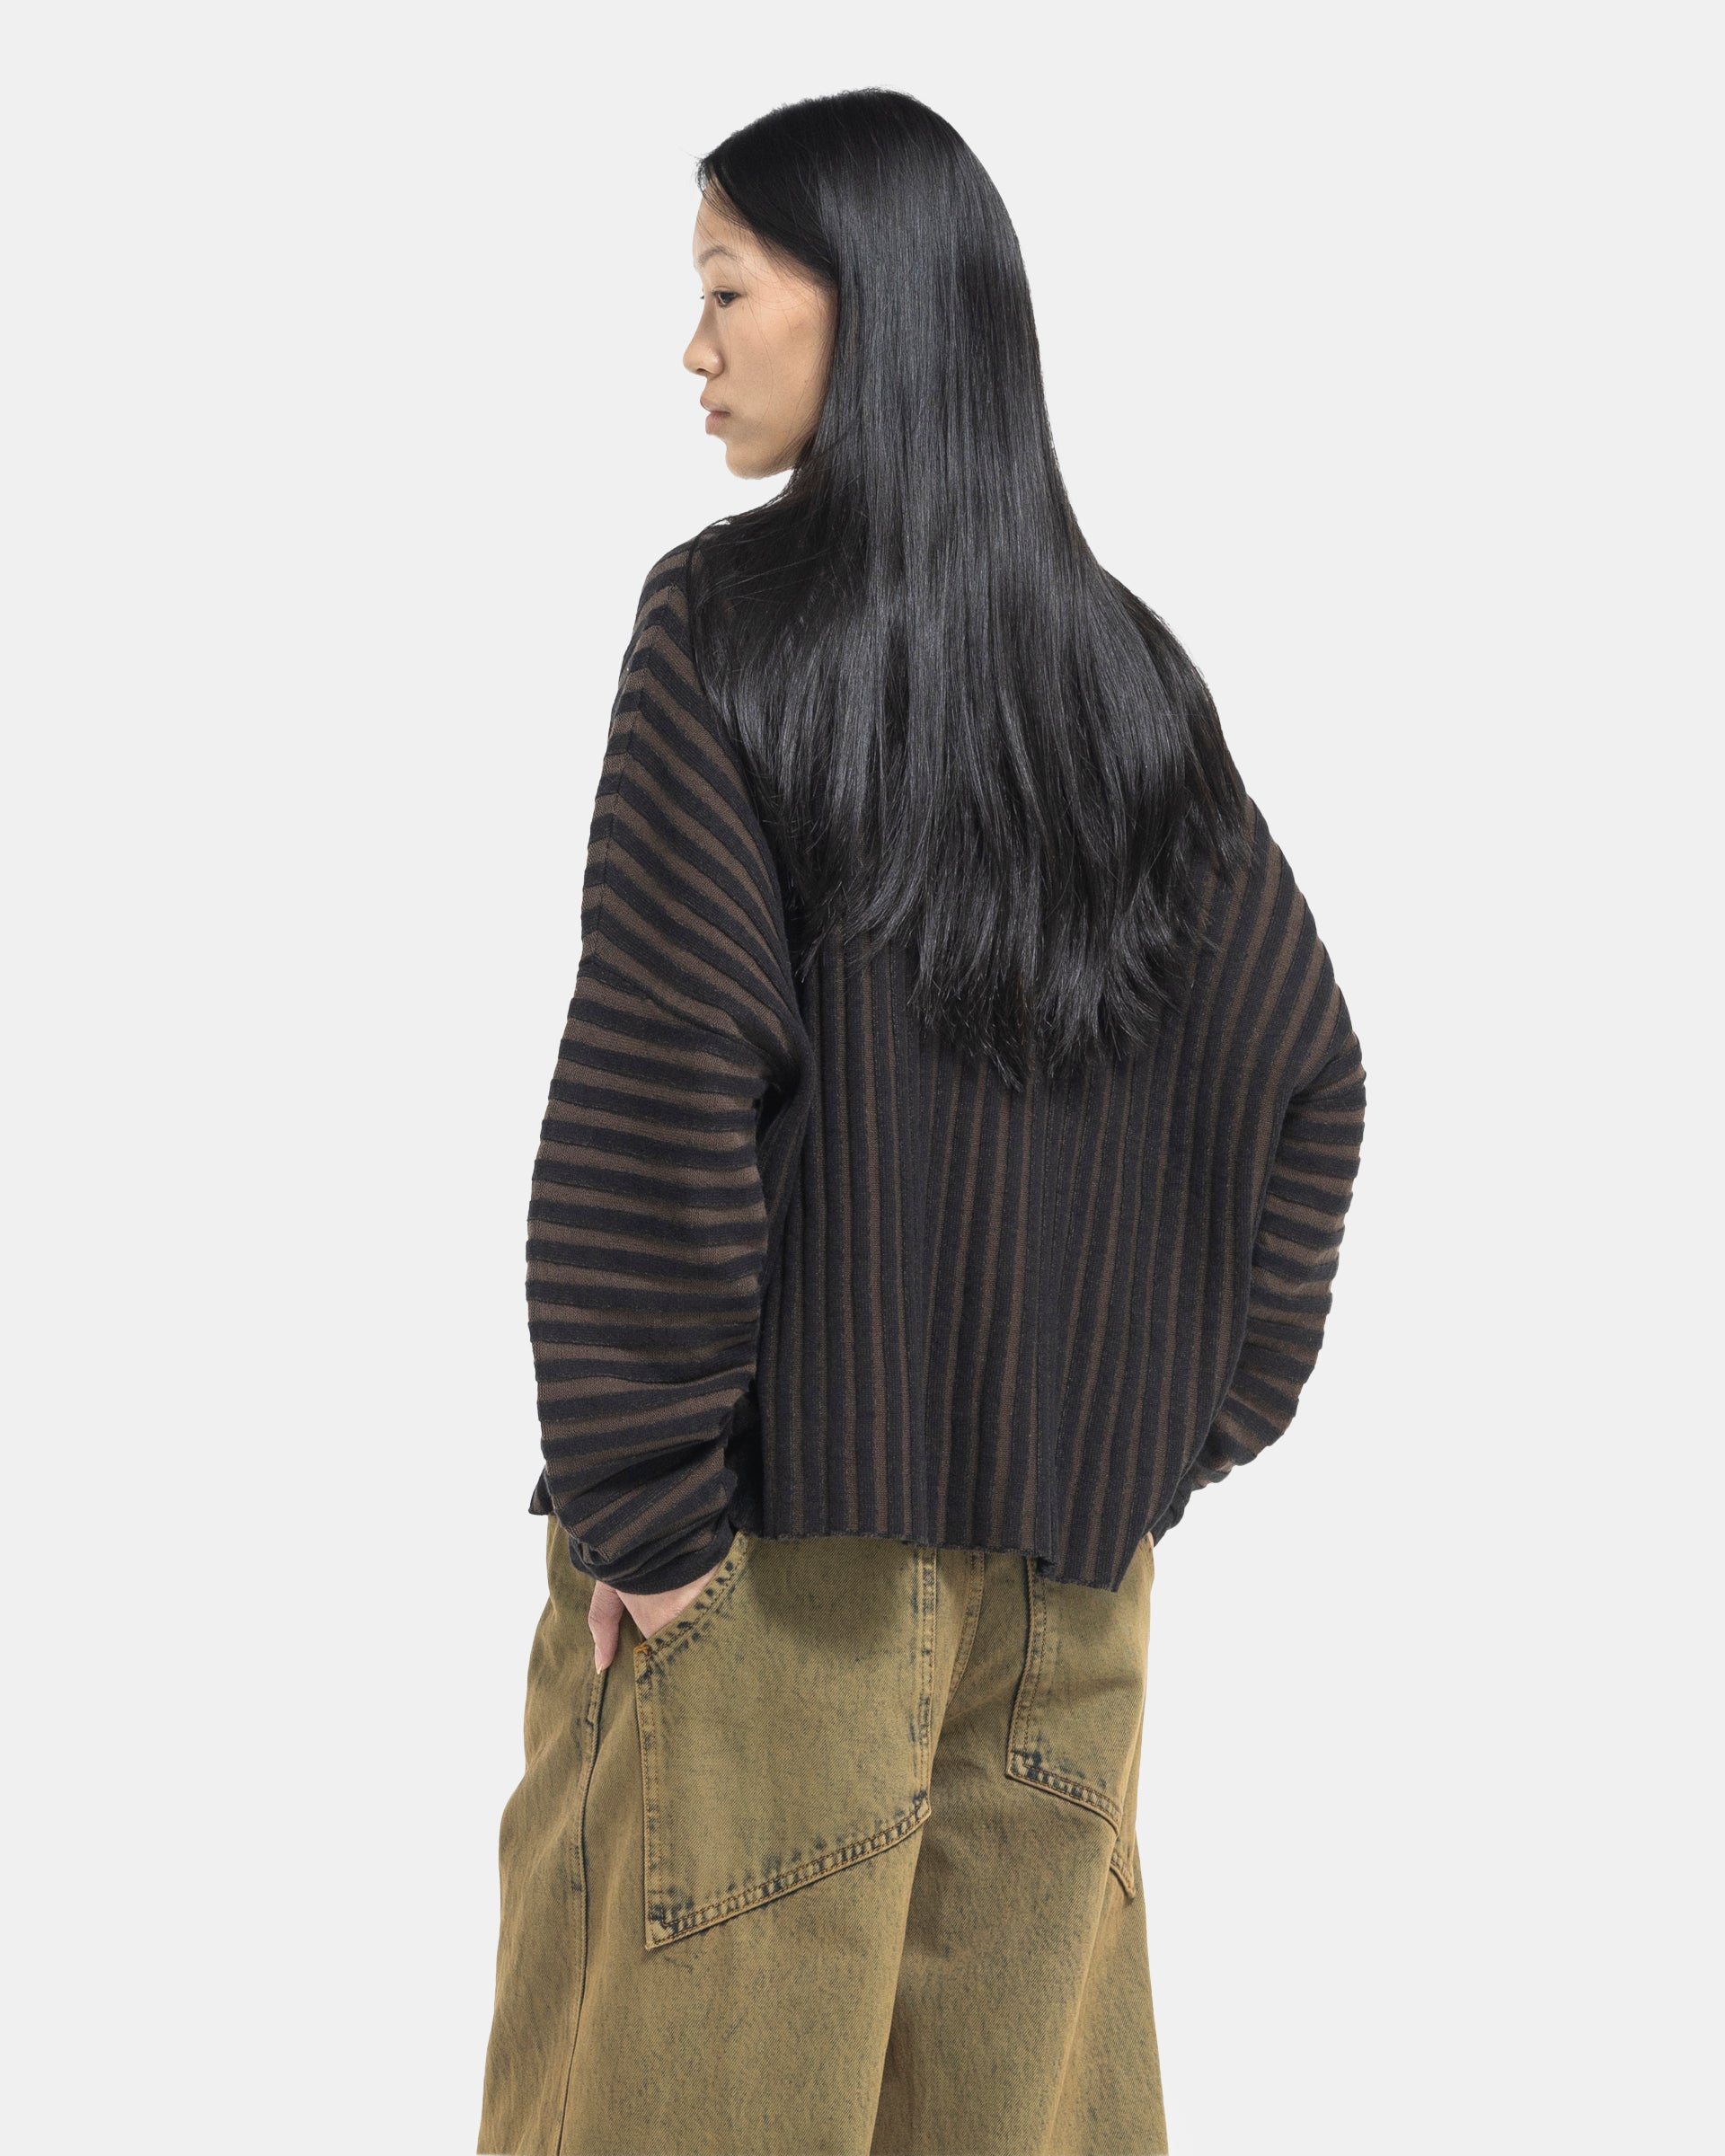 Female model wearing Eckhaus Latta Designer Wool Brown Sweater with knit stripes